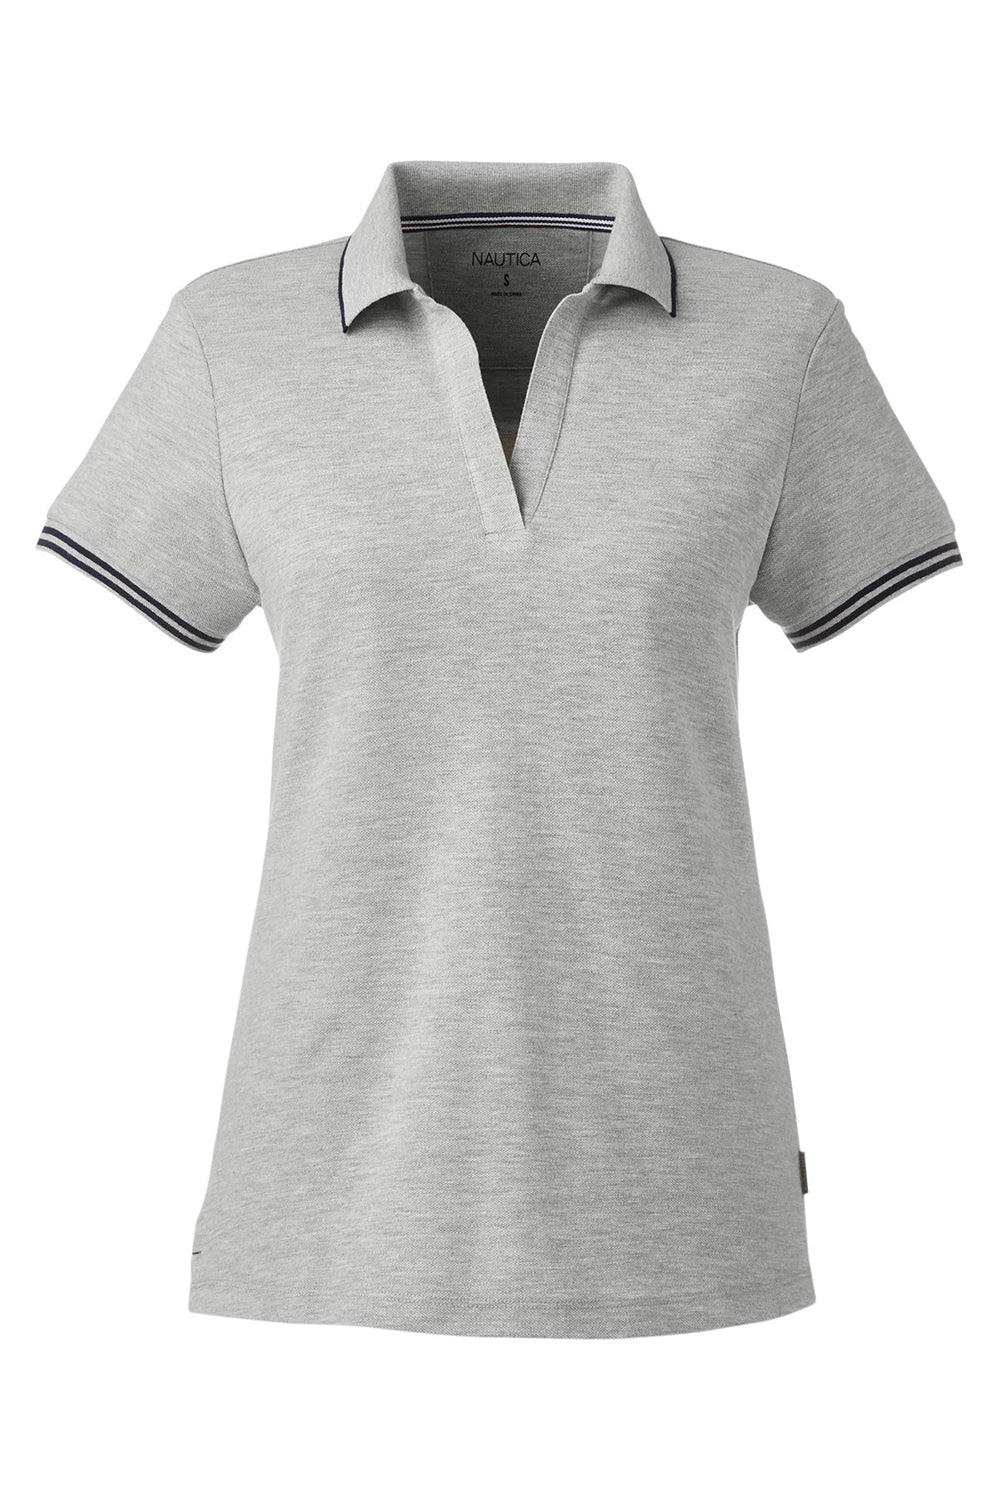 Nautica N17168 Womens Desk Short Sleeve Polo Shirt Oxford Grey/Navy Blue Flat Front